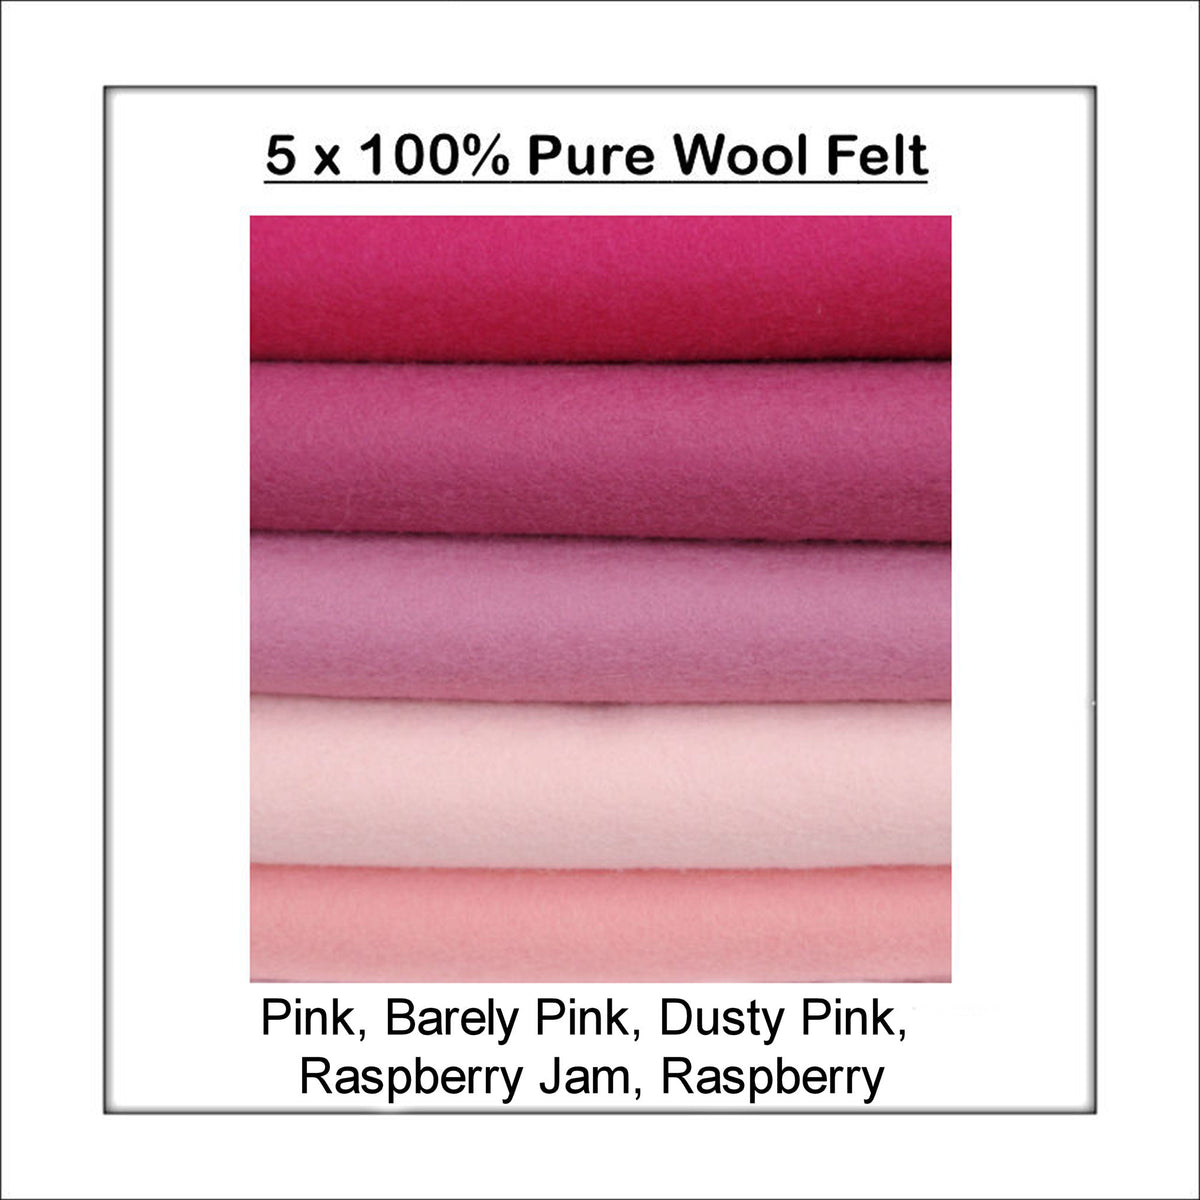 100% pure wool felt - pink shades - 5 squares